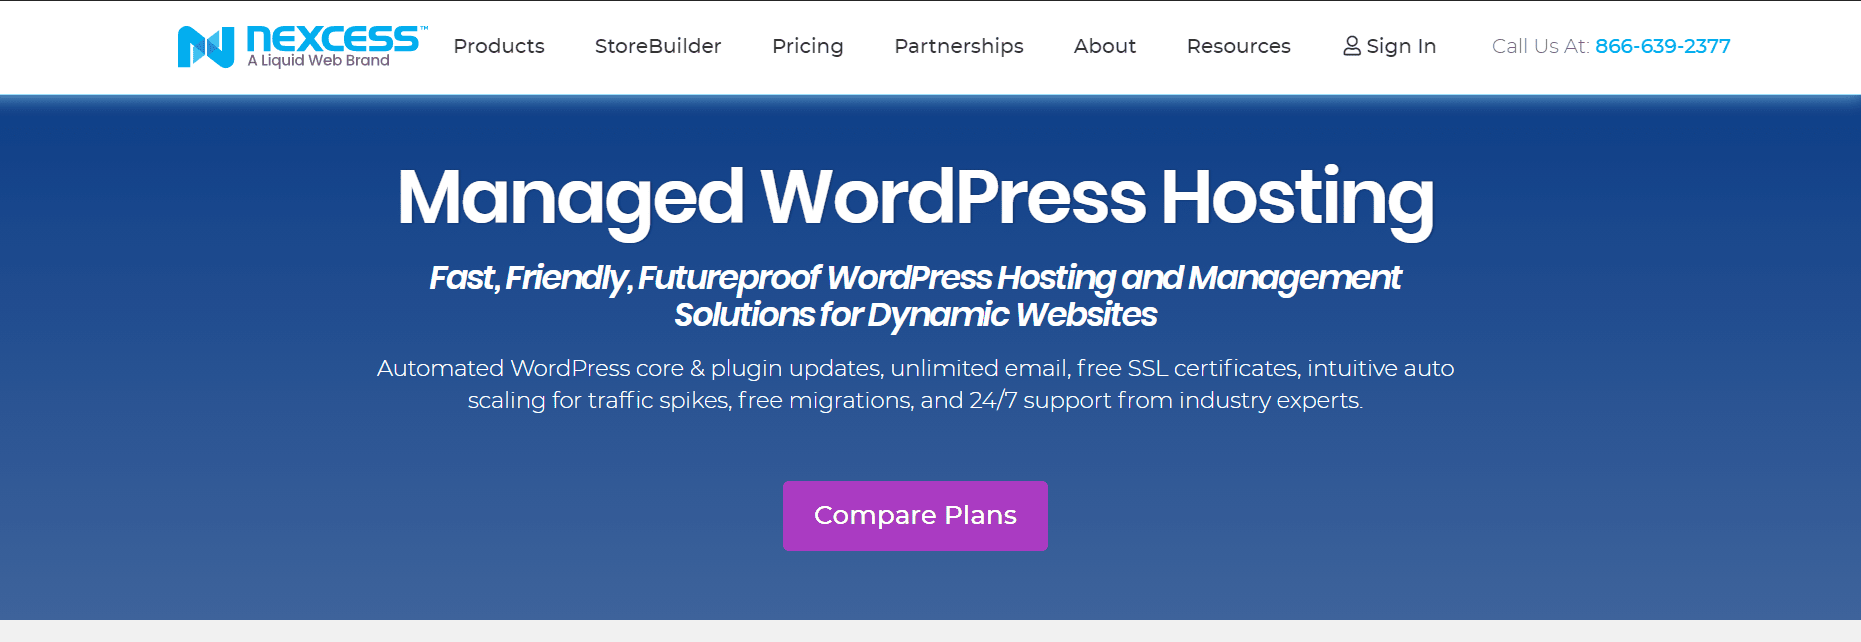 Nexcess Review - Managed WordPress Hosting